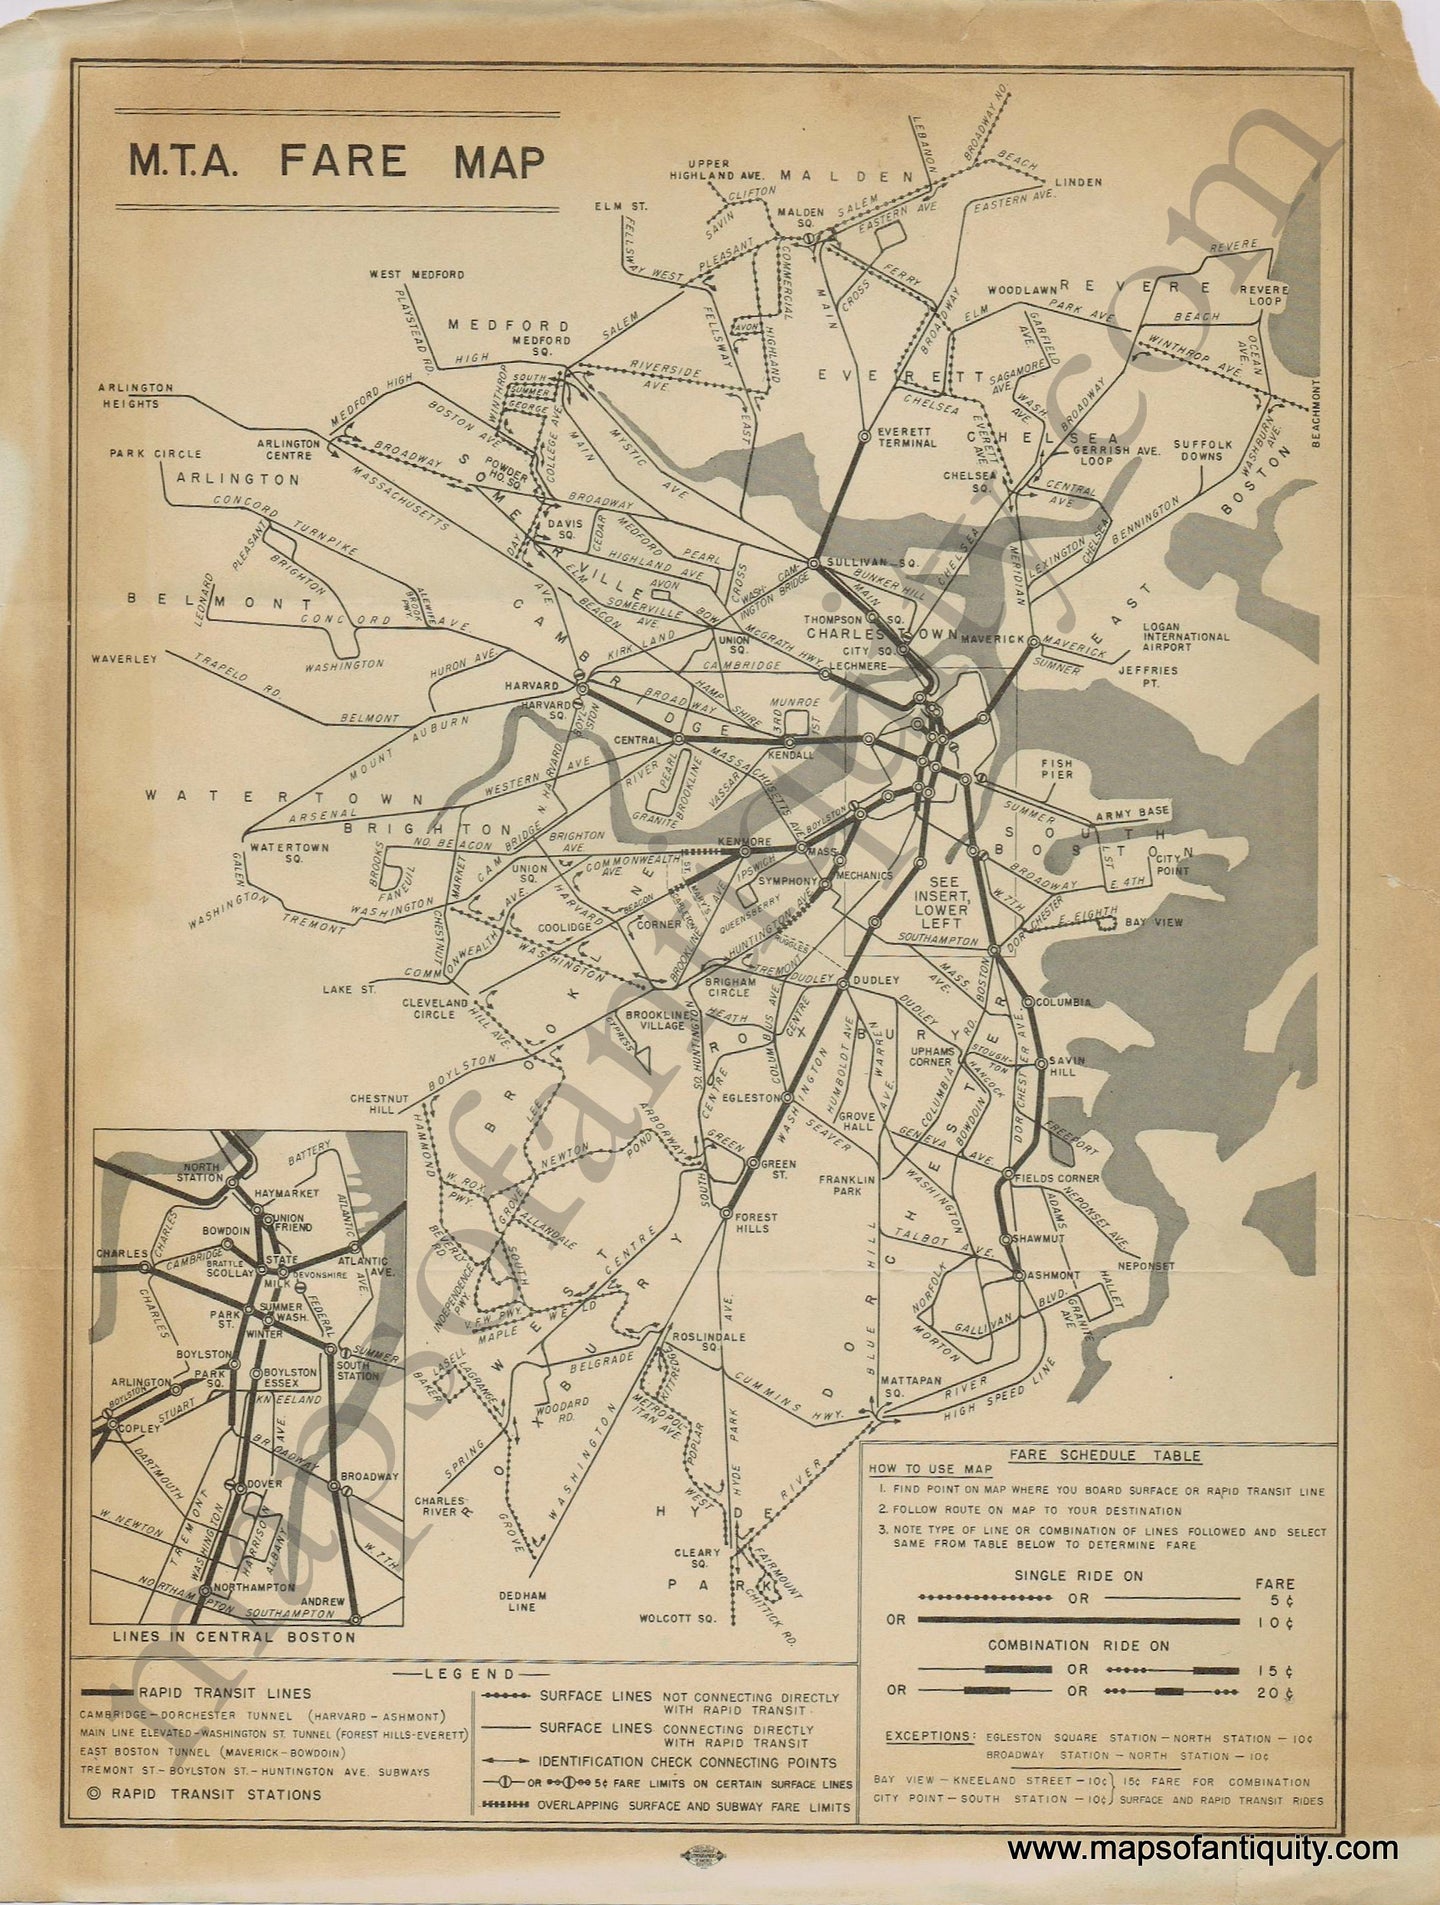 Antique-Uncolored-Map-M.T.A.-Fare-Map-c.-1950-Metropolitan-Transit-Authority-1950s-1900s-20th-century-Maps-of-Antiquity